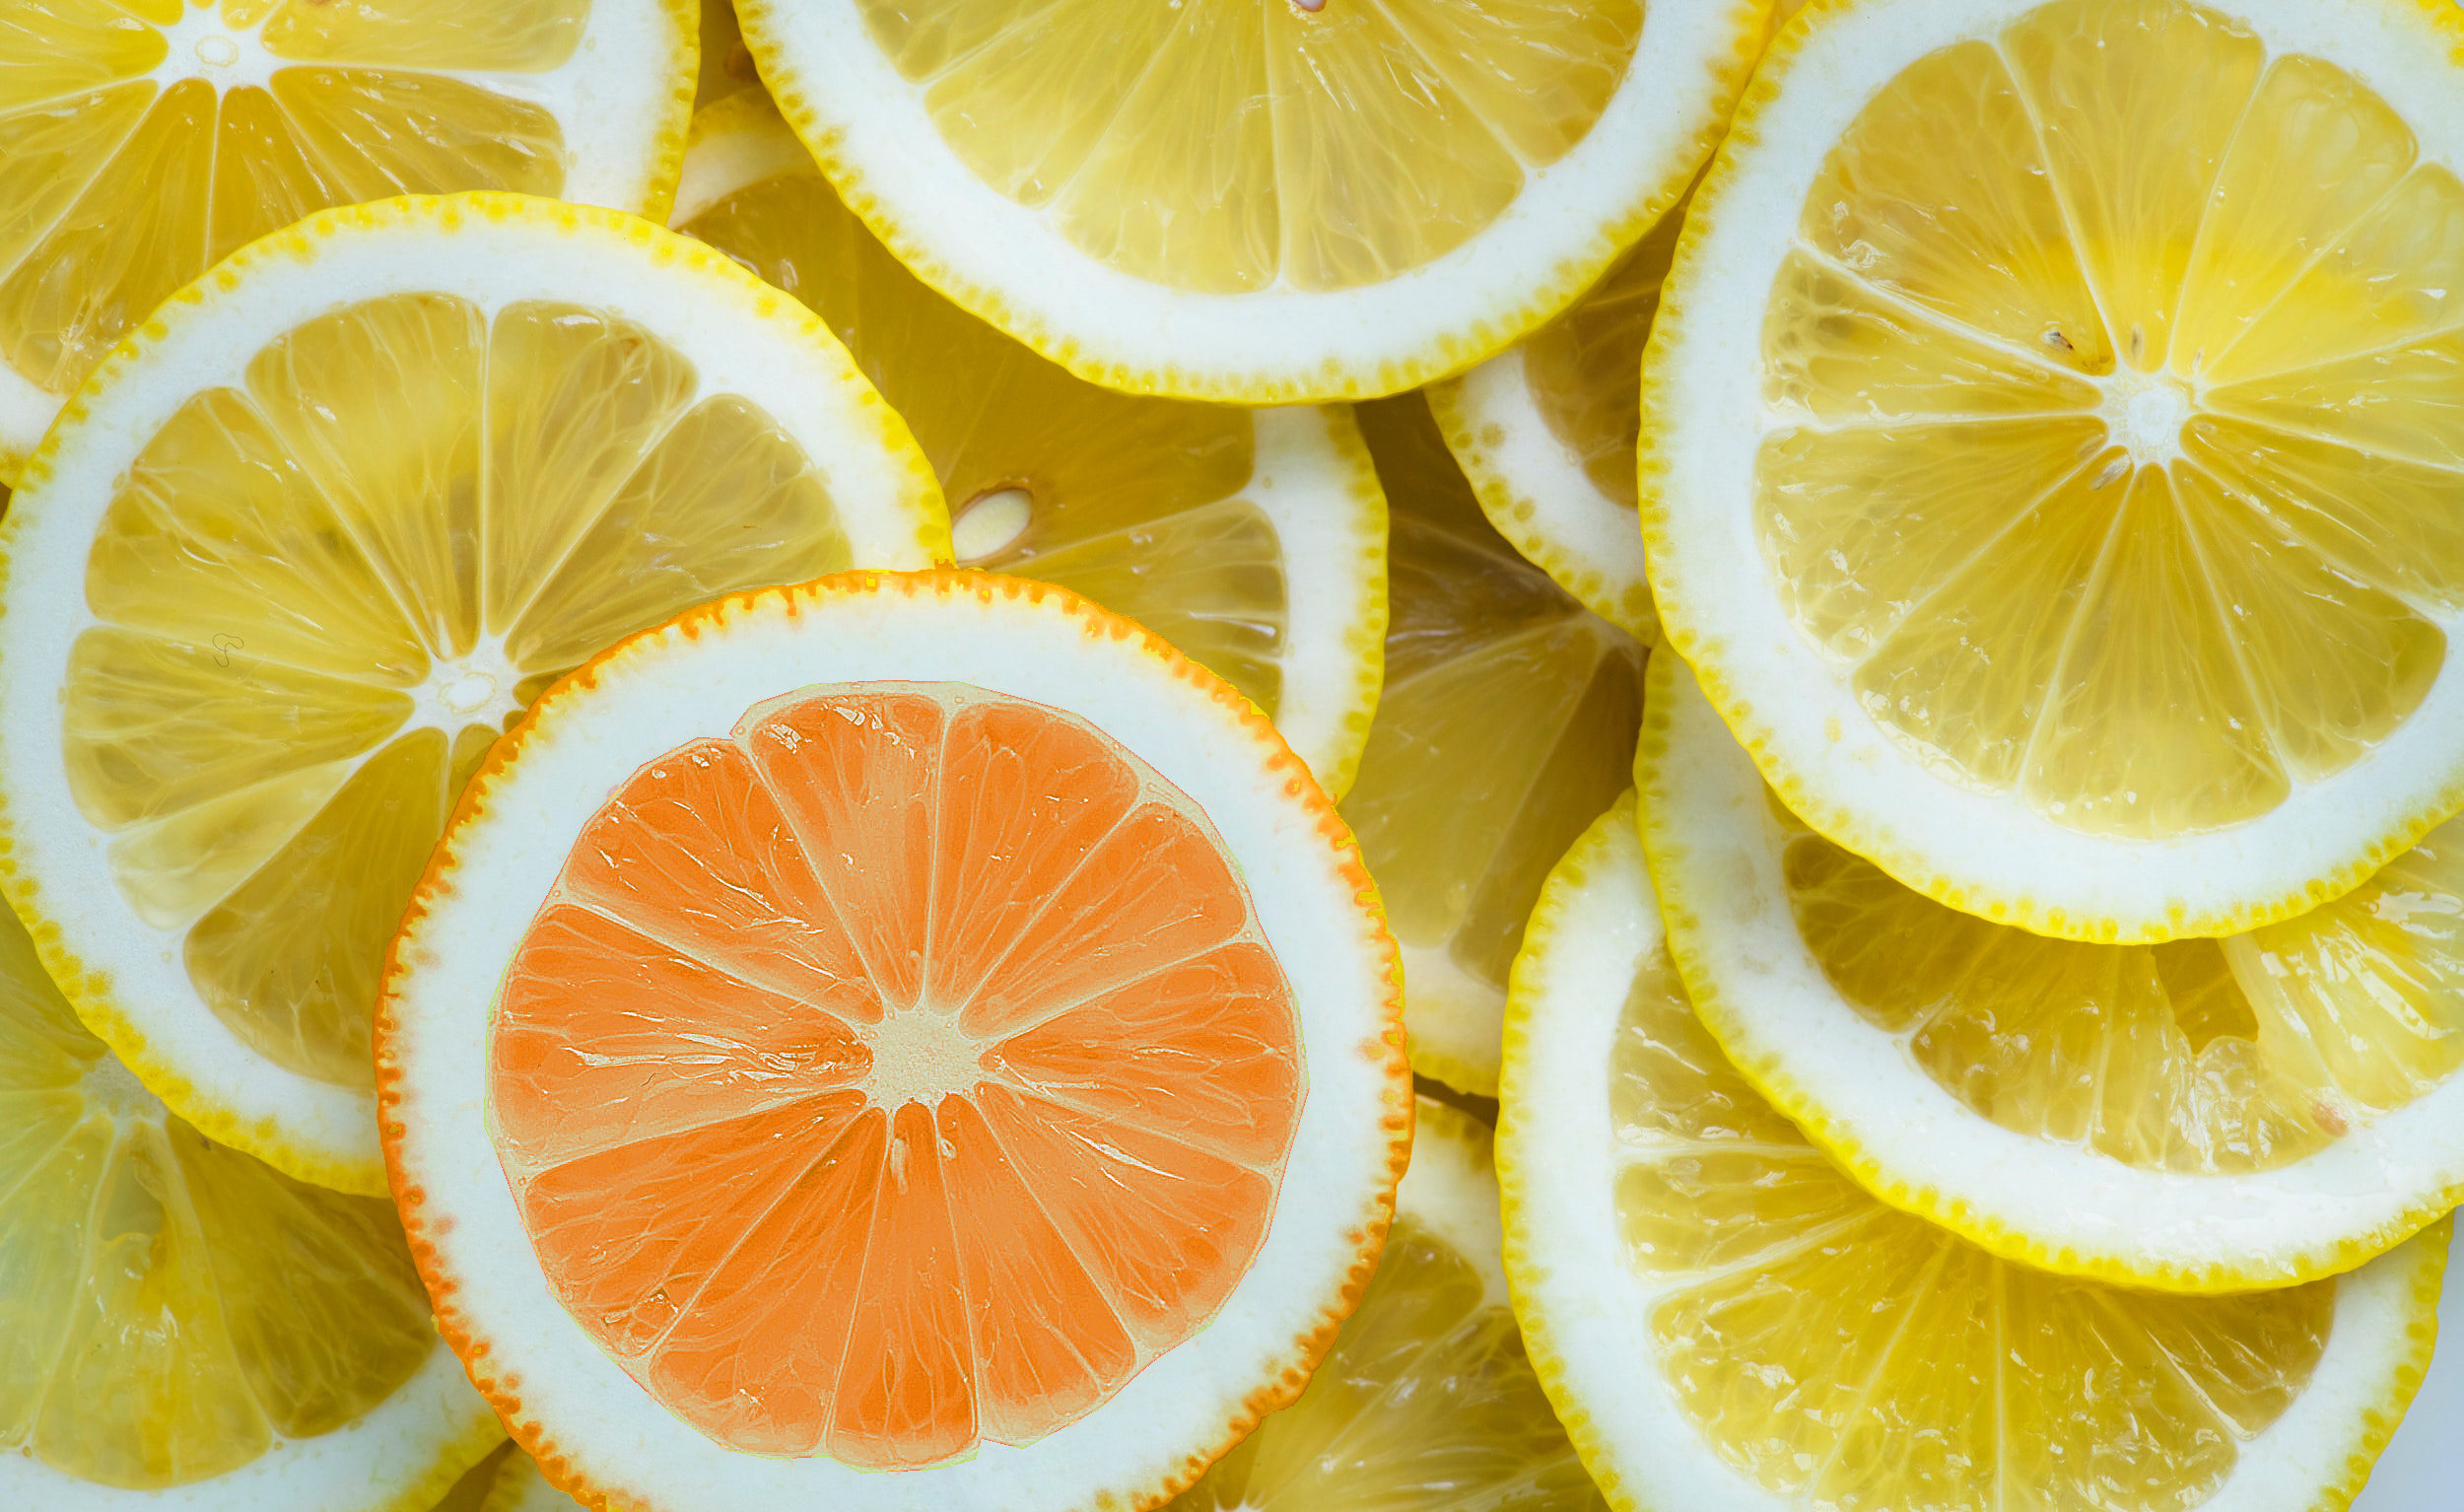 Orange slice among lemon slices